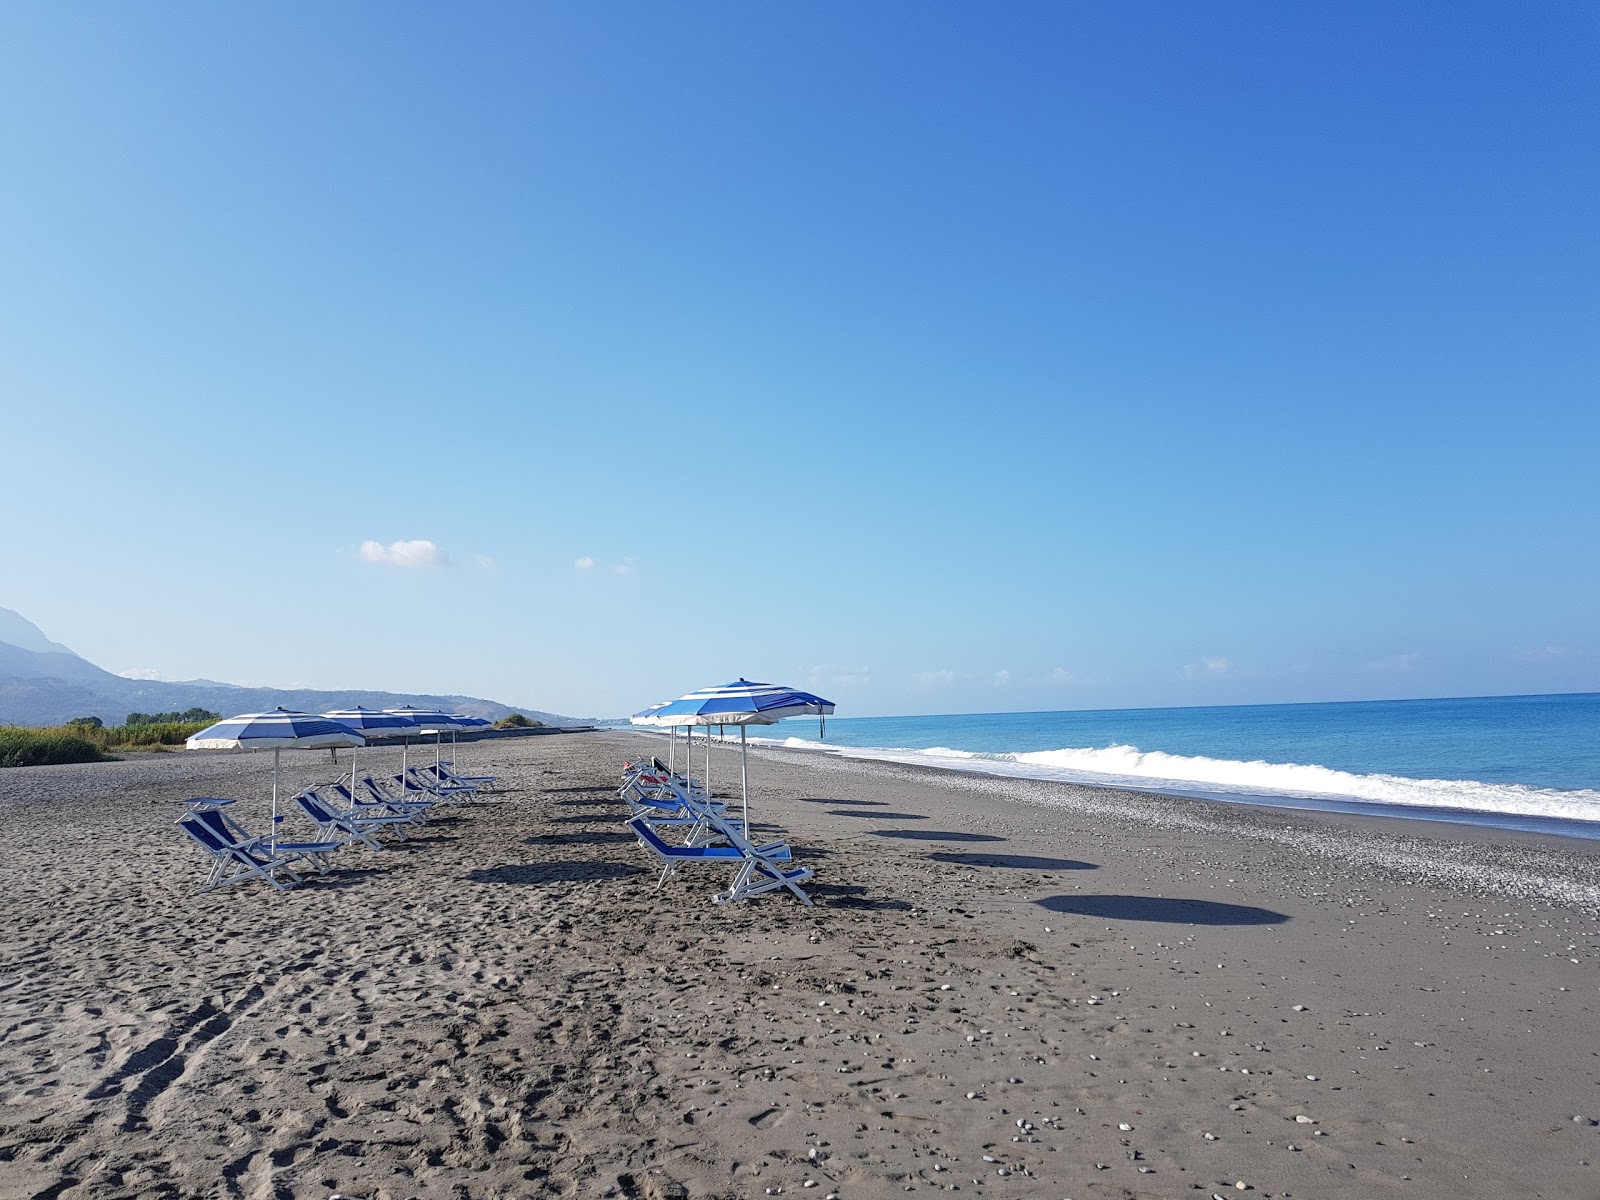 Foto von Spiaggia di Scalea II mit langer gerader strand